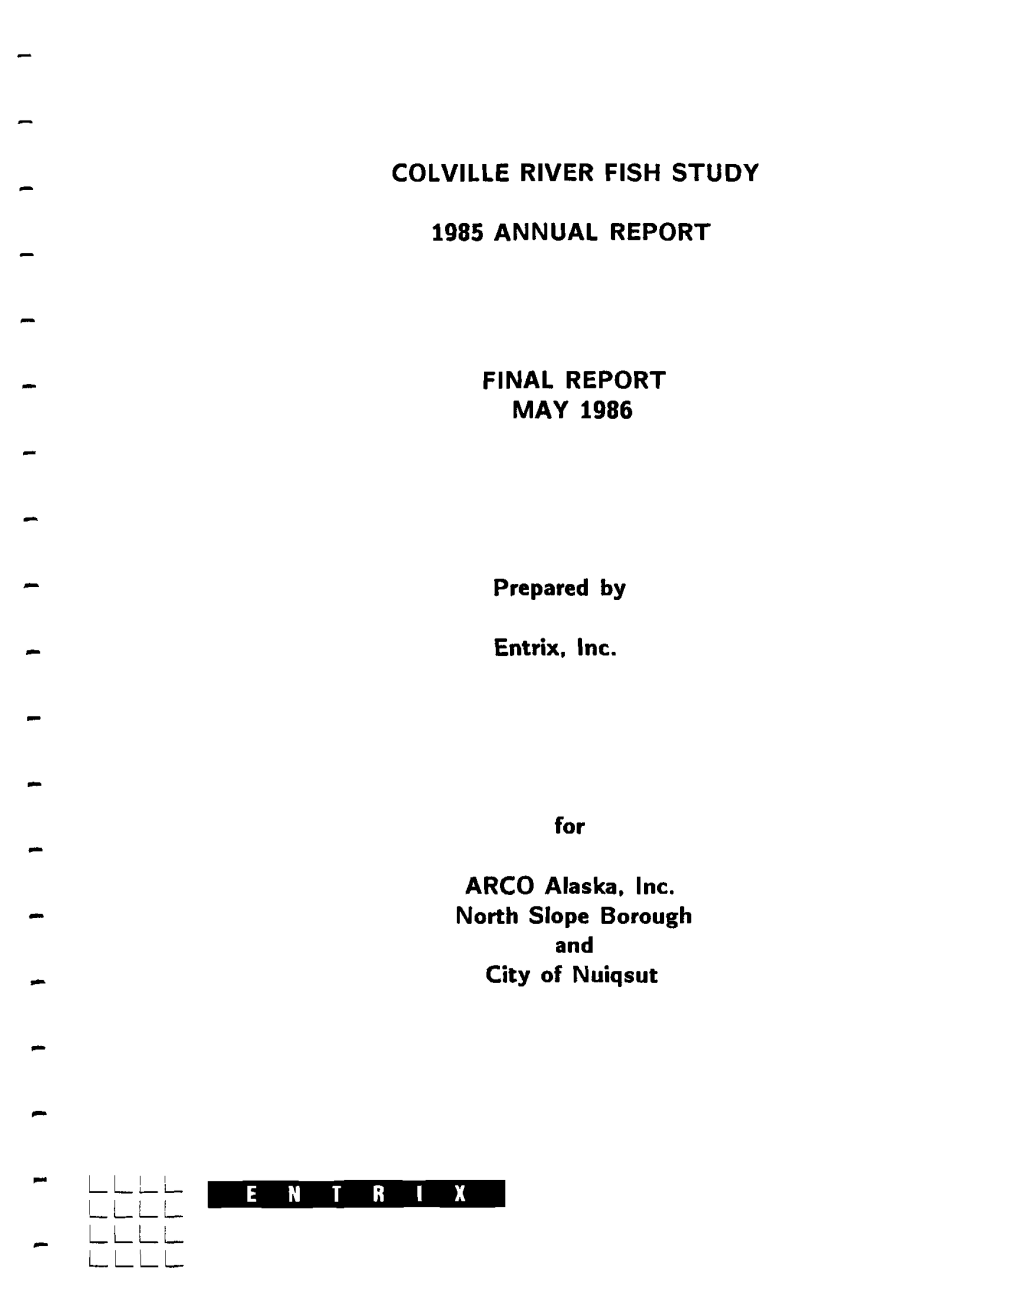 Colville River Fish Study 1985 Annual Report Final Report